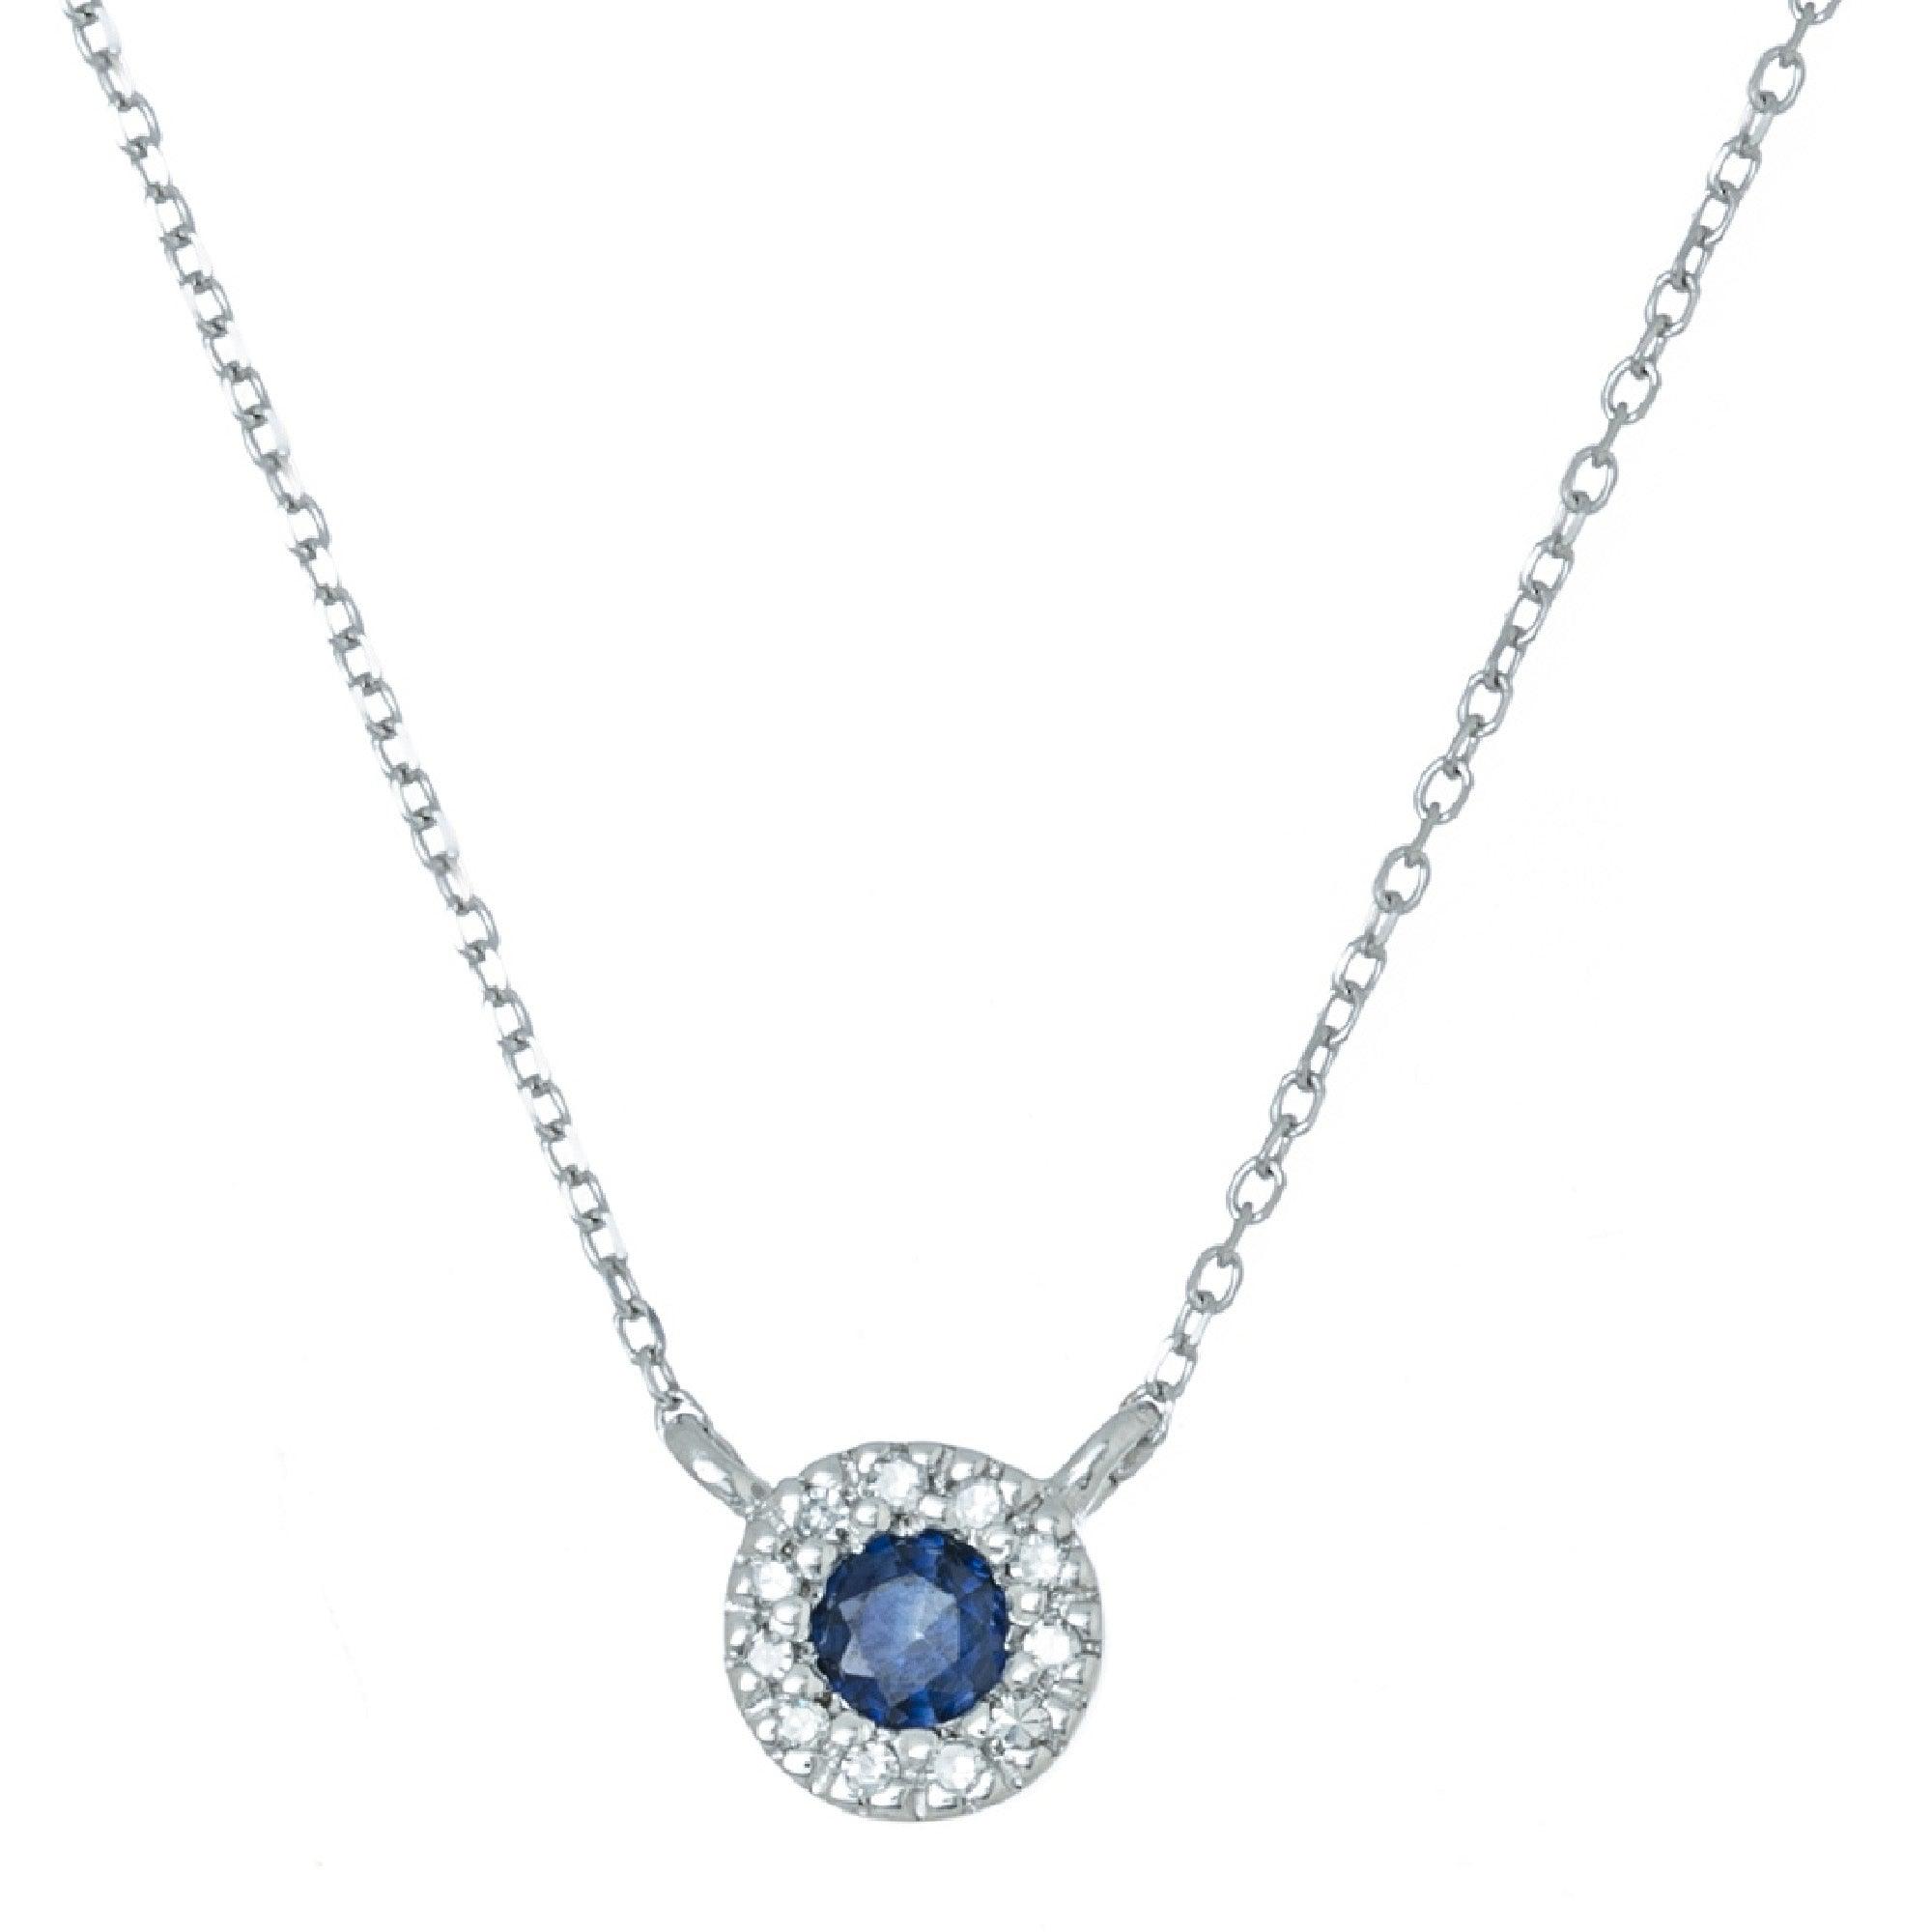 59.15 Carat Ceylon Sapphire and White Diamond Necklace -V39209 |  vividdiamonds